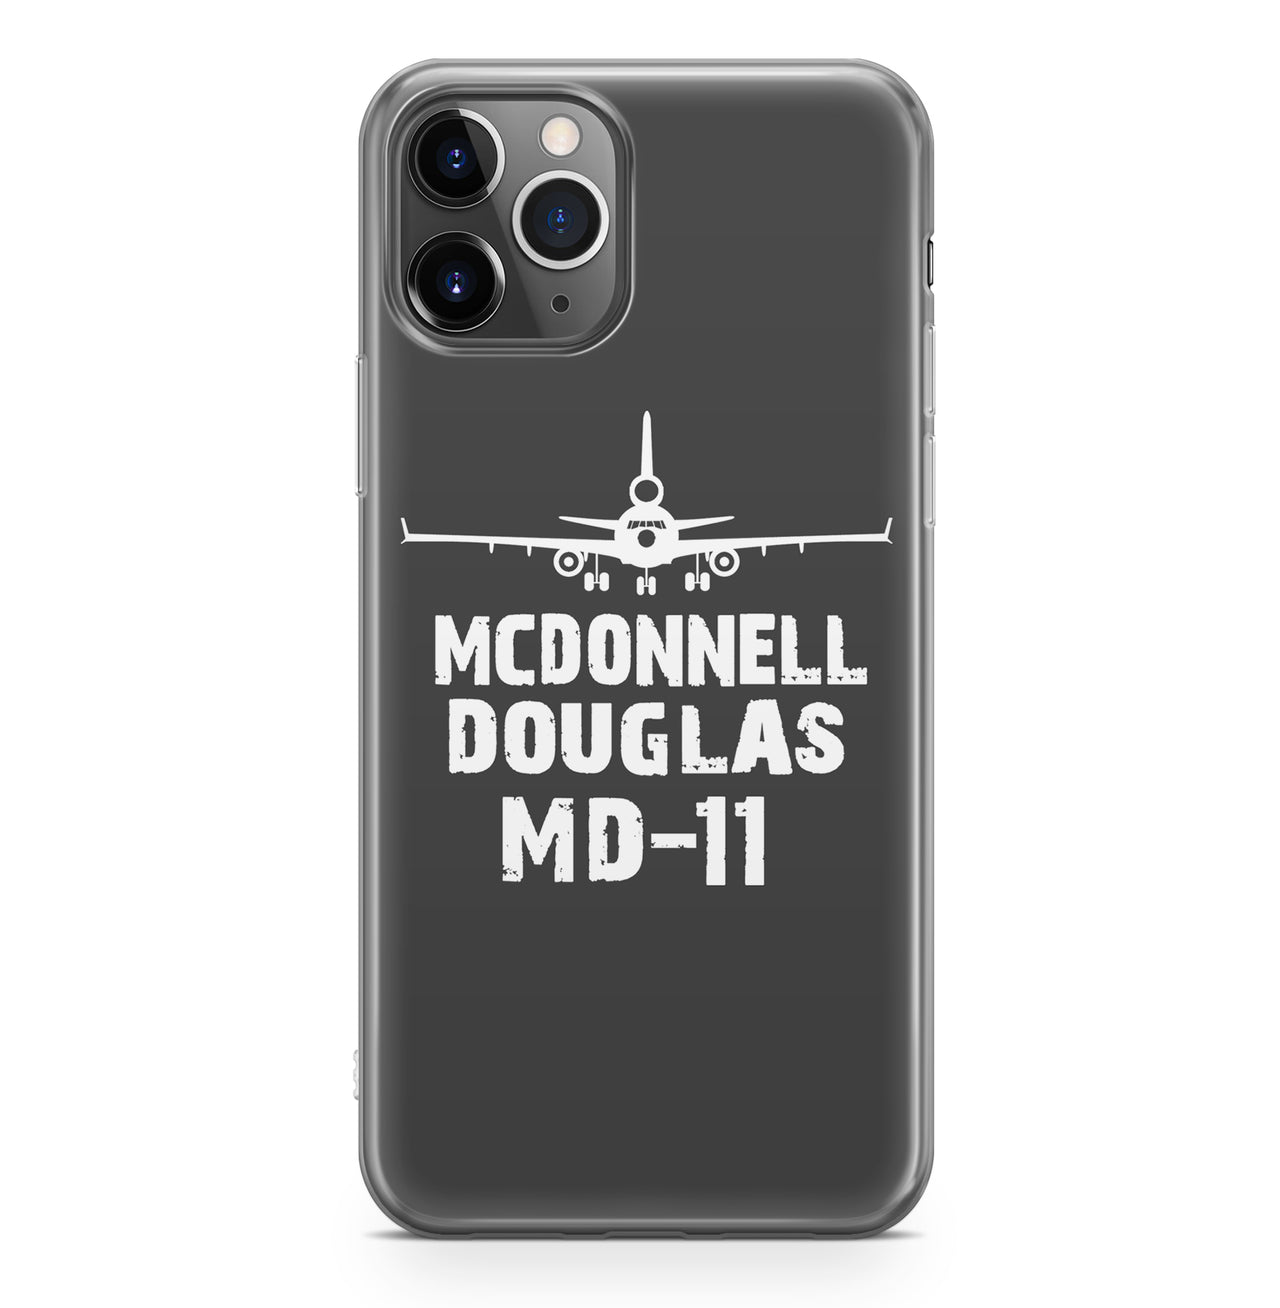 McDonnell Douglas MD-11 & Plane Designed iPhone Cases